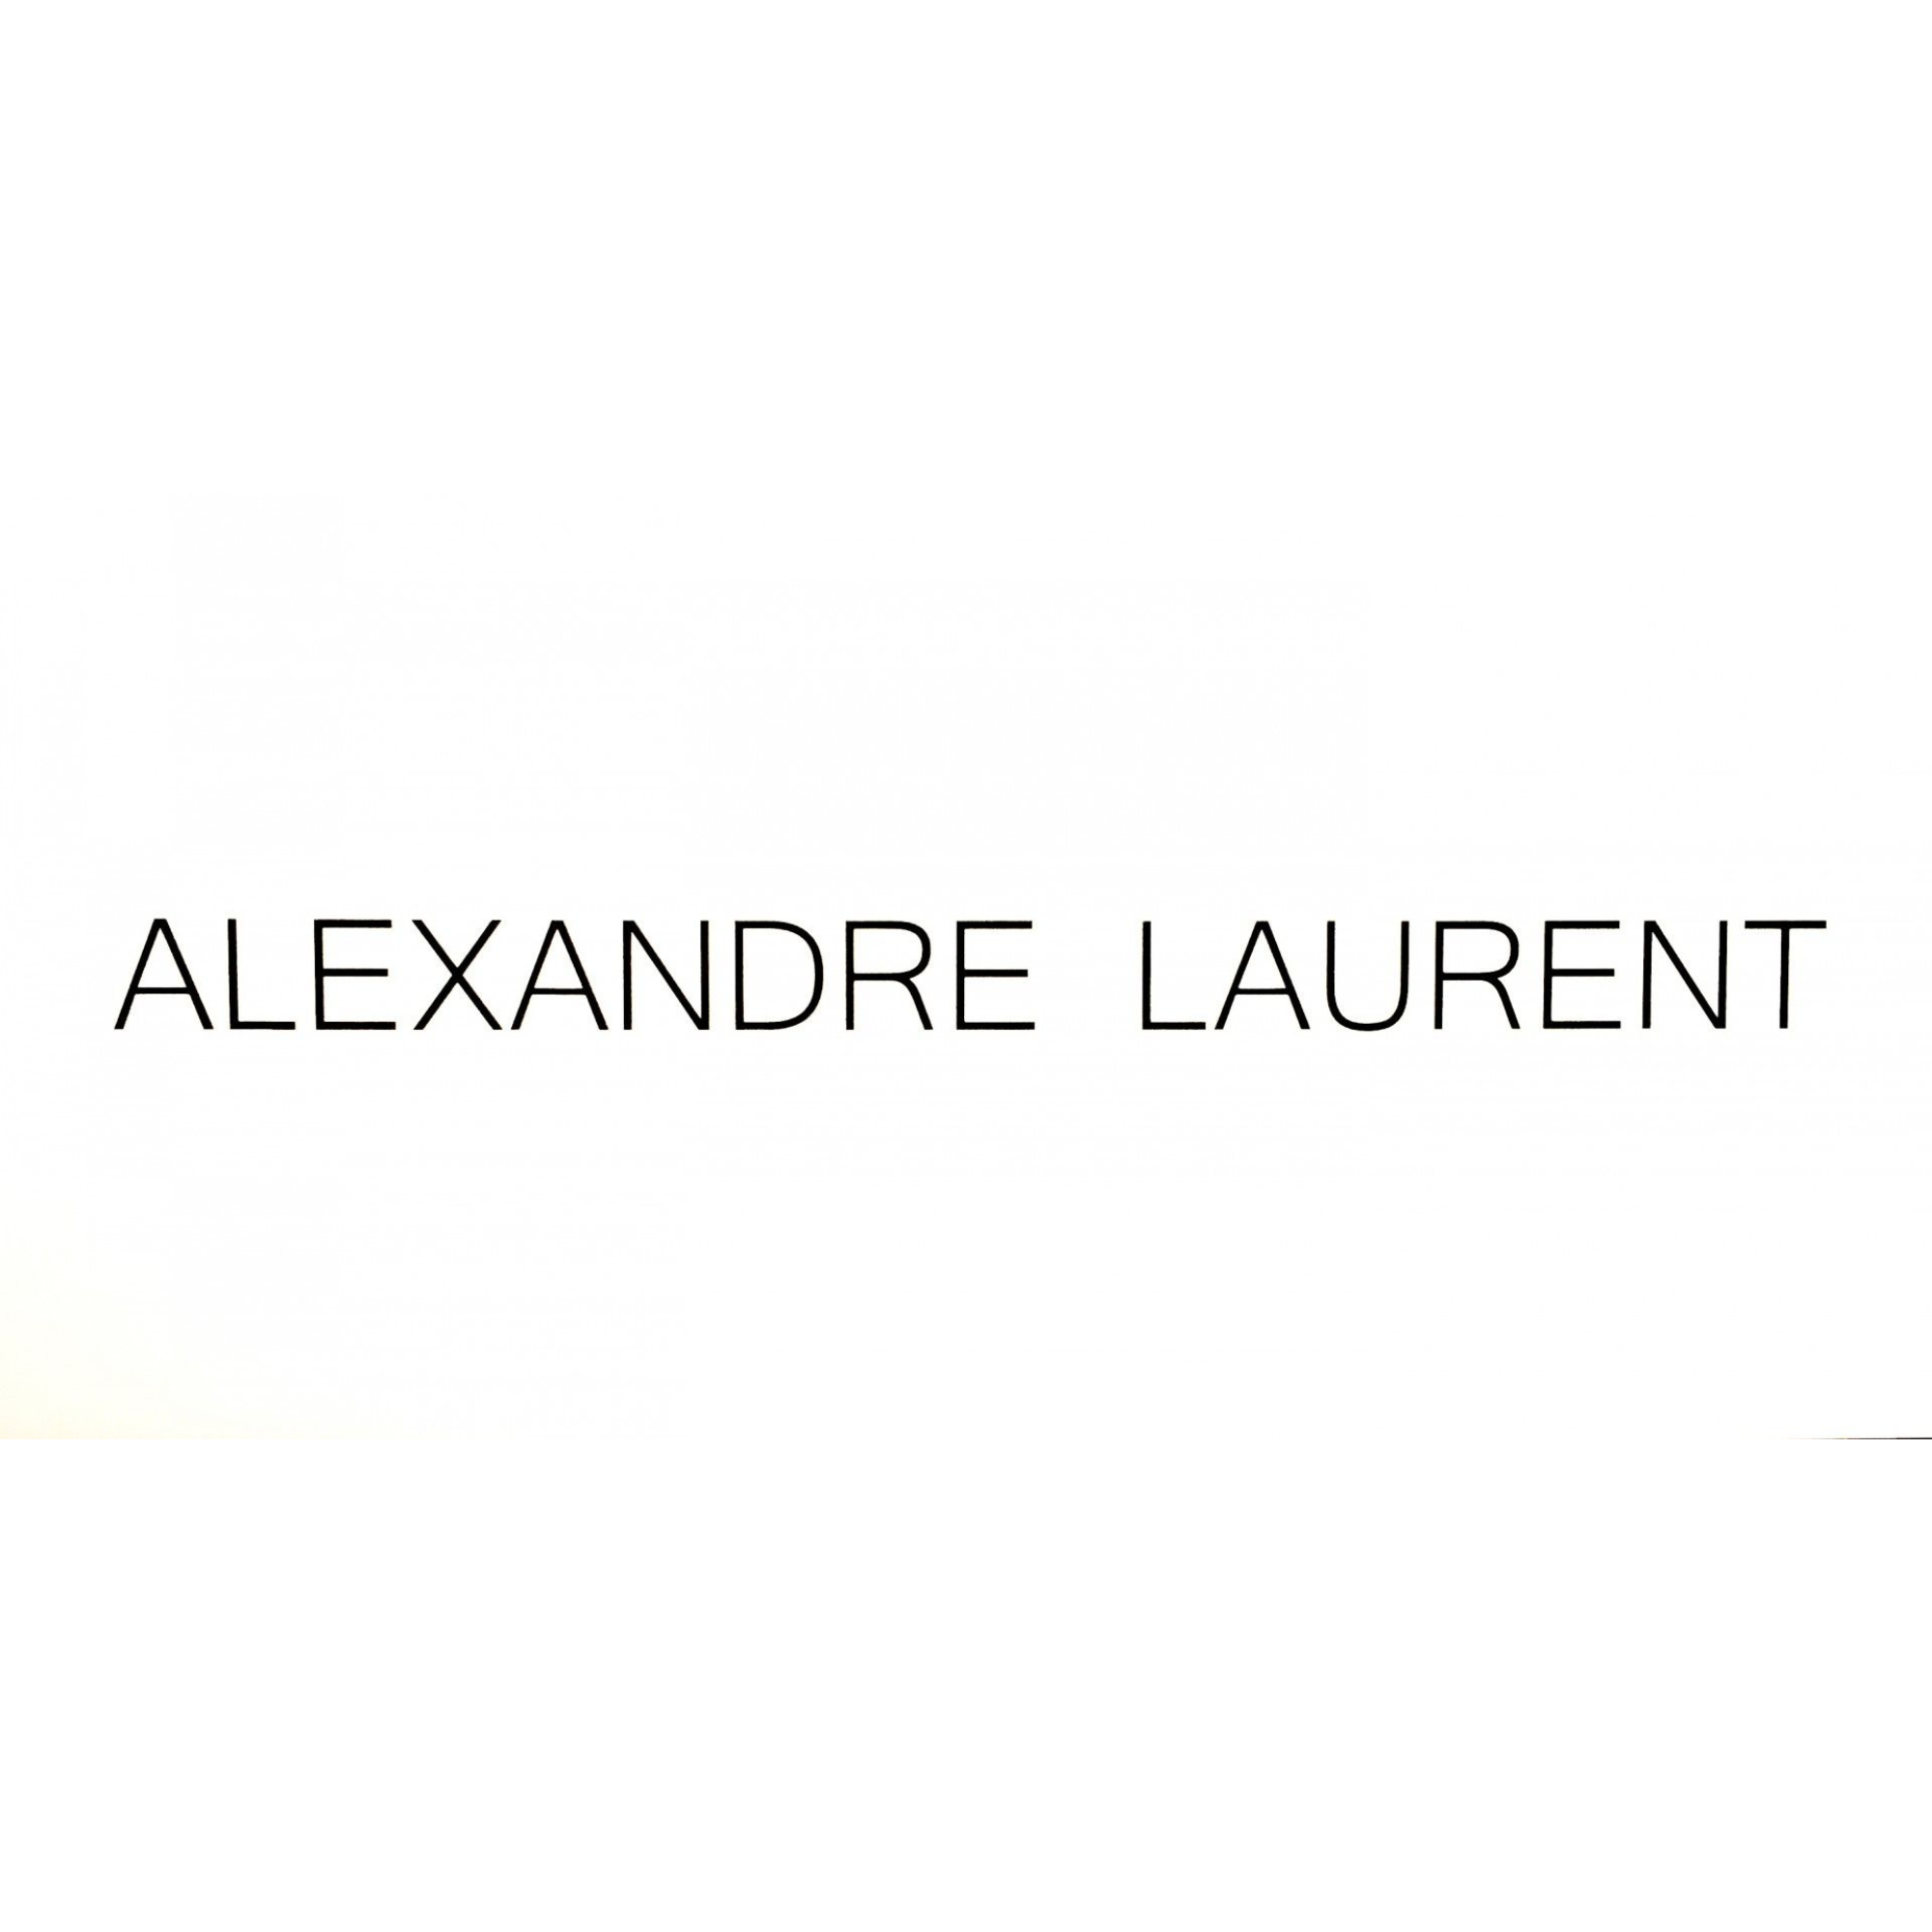 ALEXANDRE LAURENT